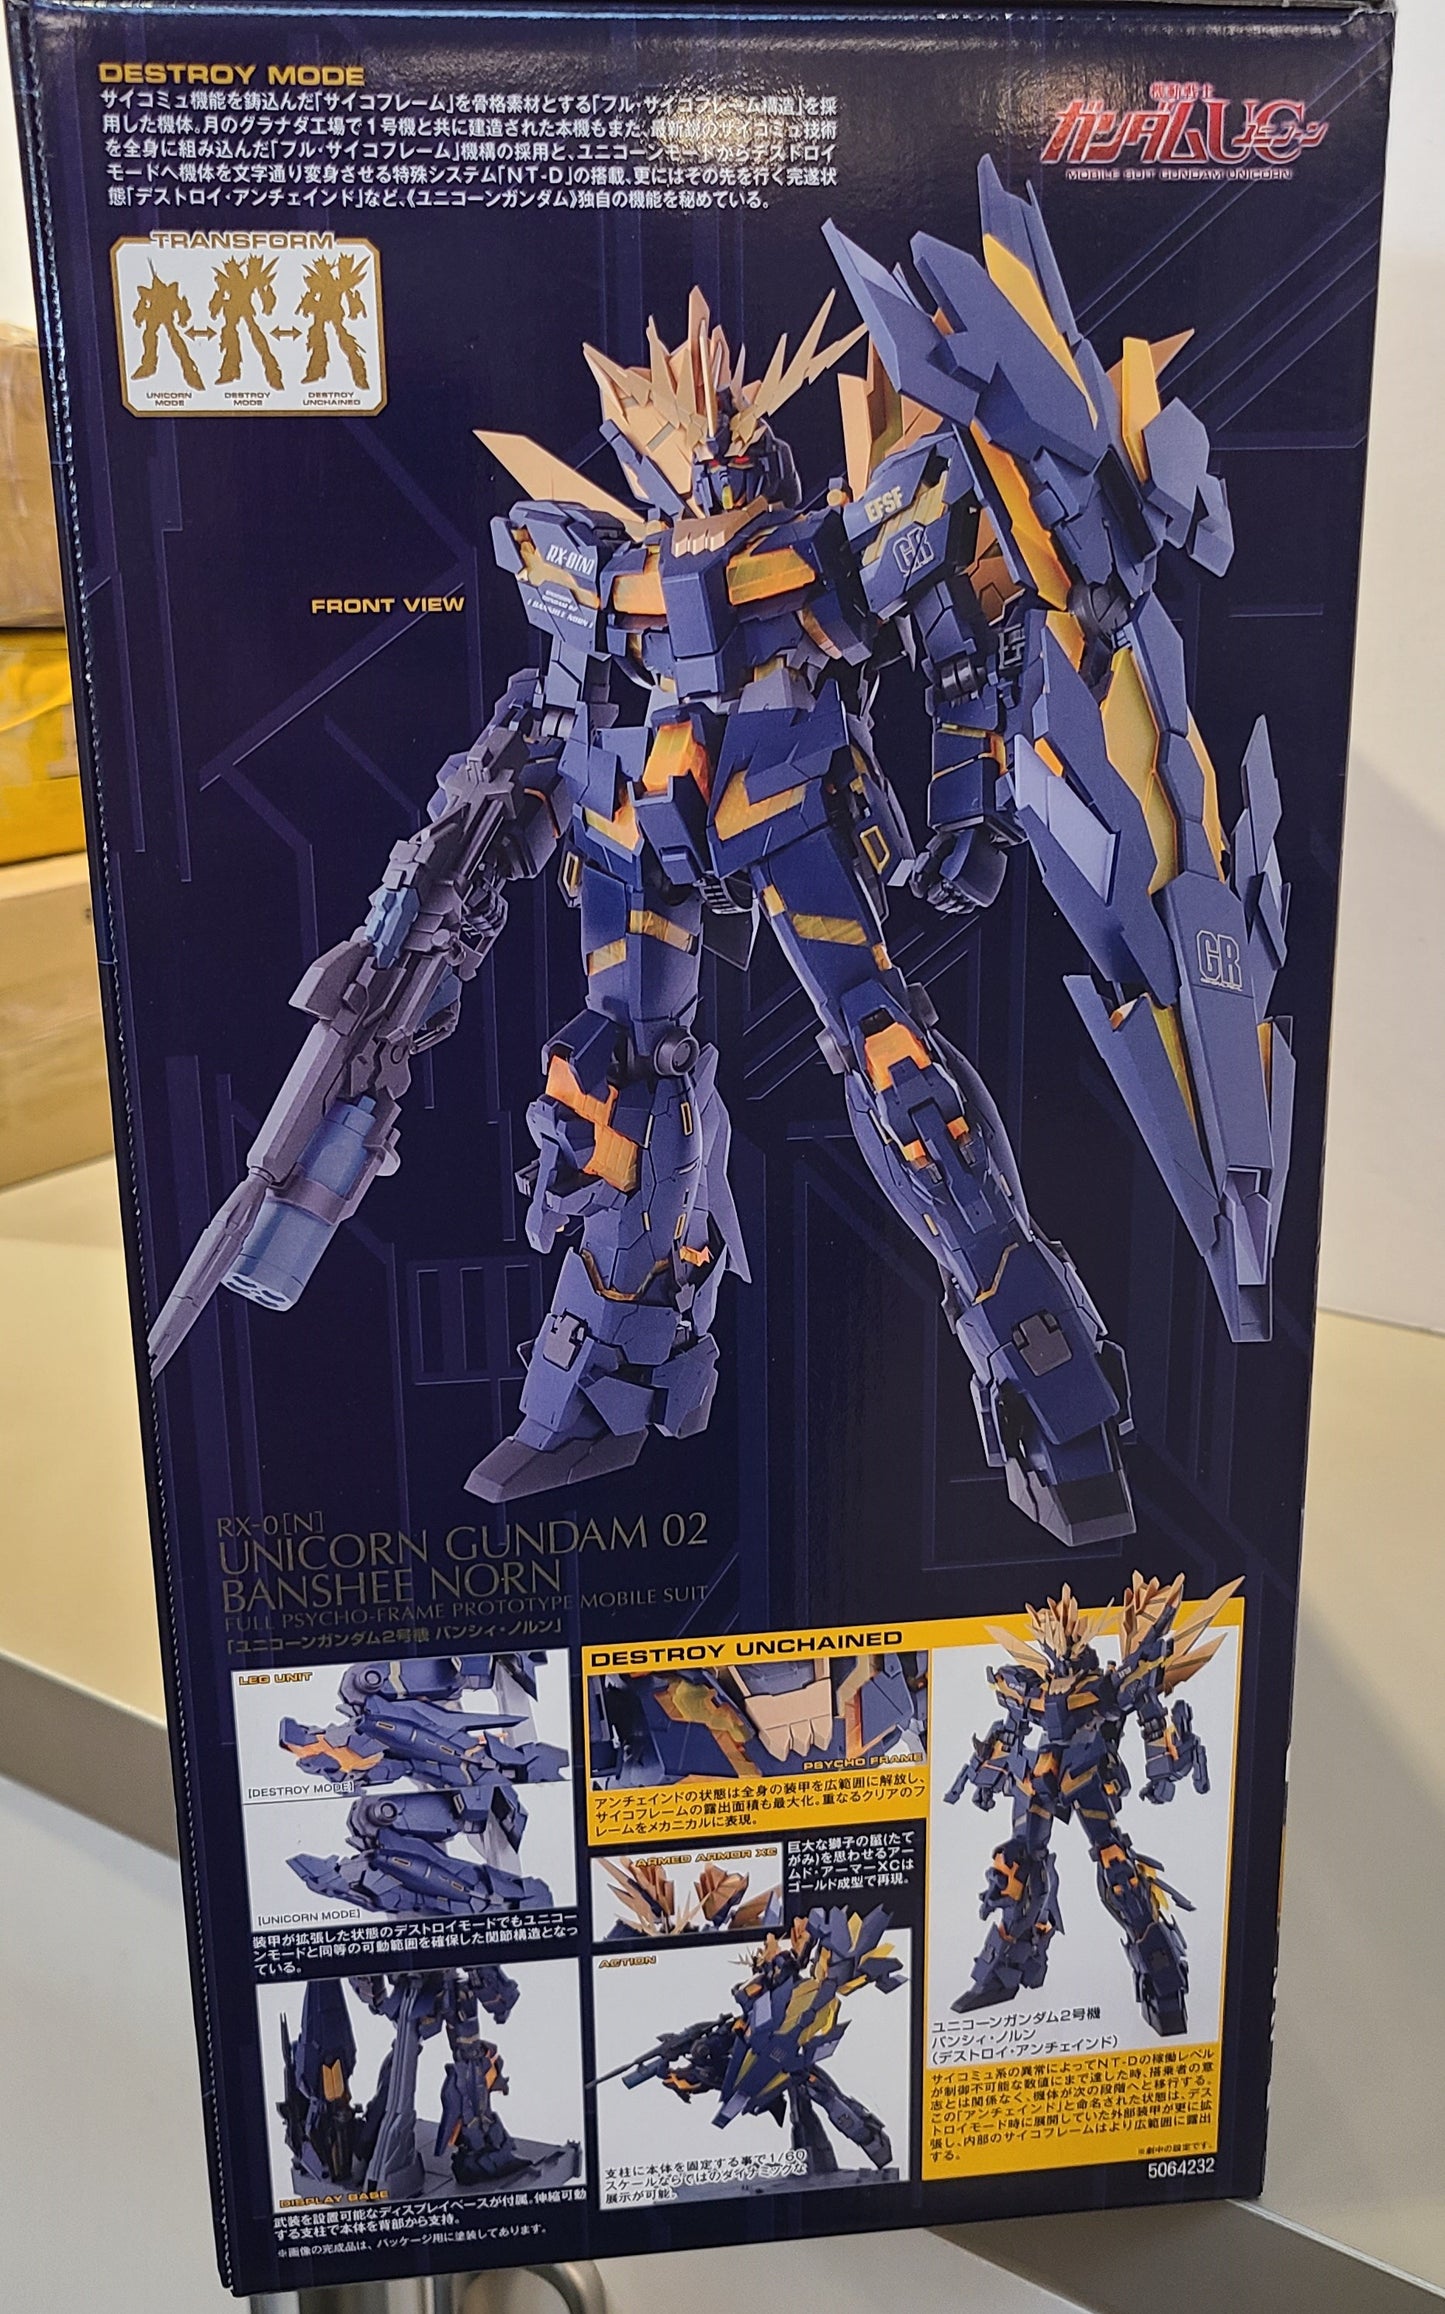 Perfect Grade RX-0 [N] Unicorn Gundam 02 Banshee Norn (Pre-Owned)